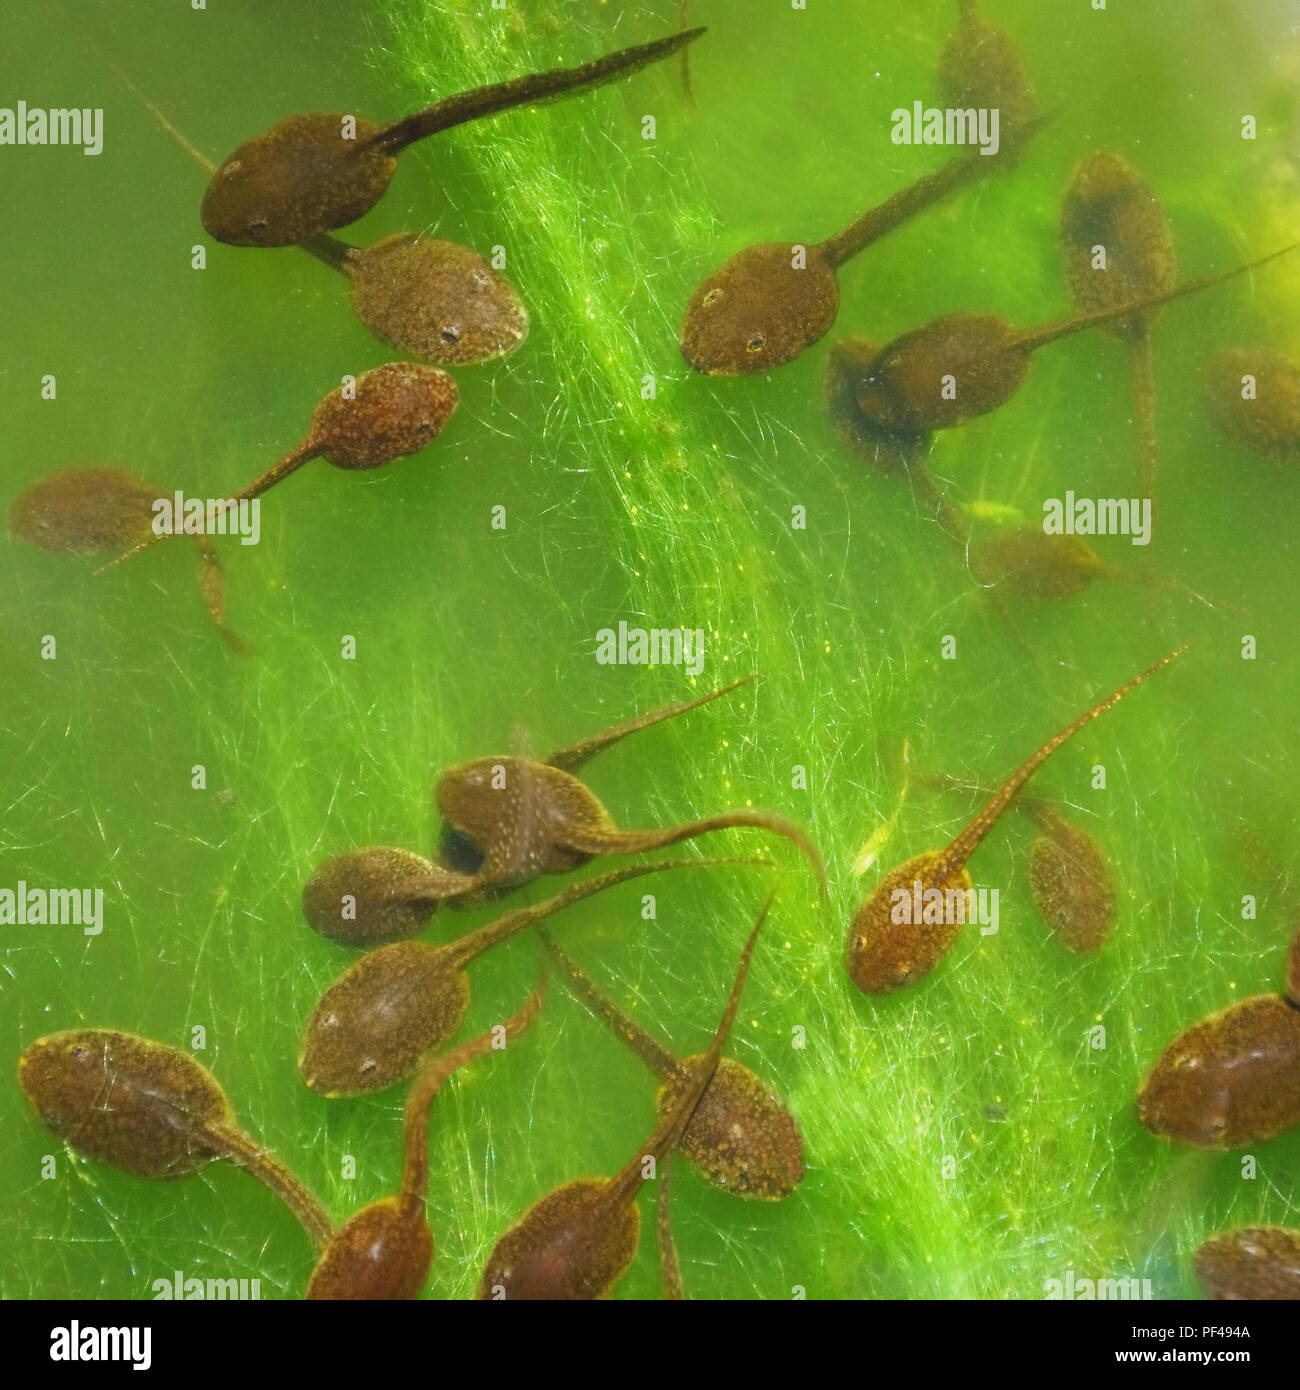 Group of common frog tadpoles (Rana temporaria) feeding on green string algae Stock Photo